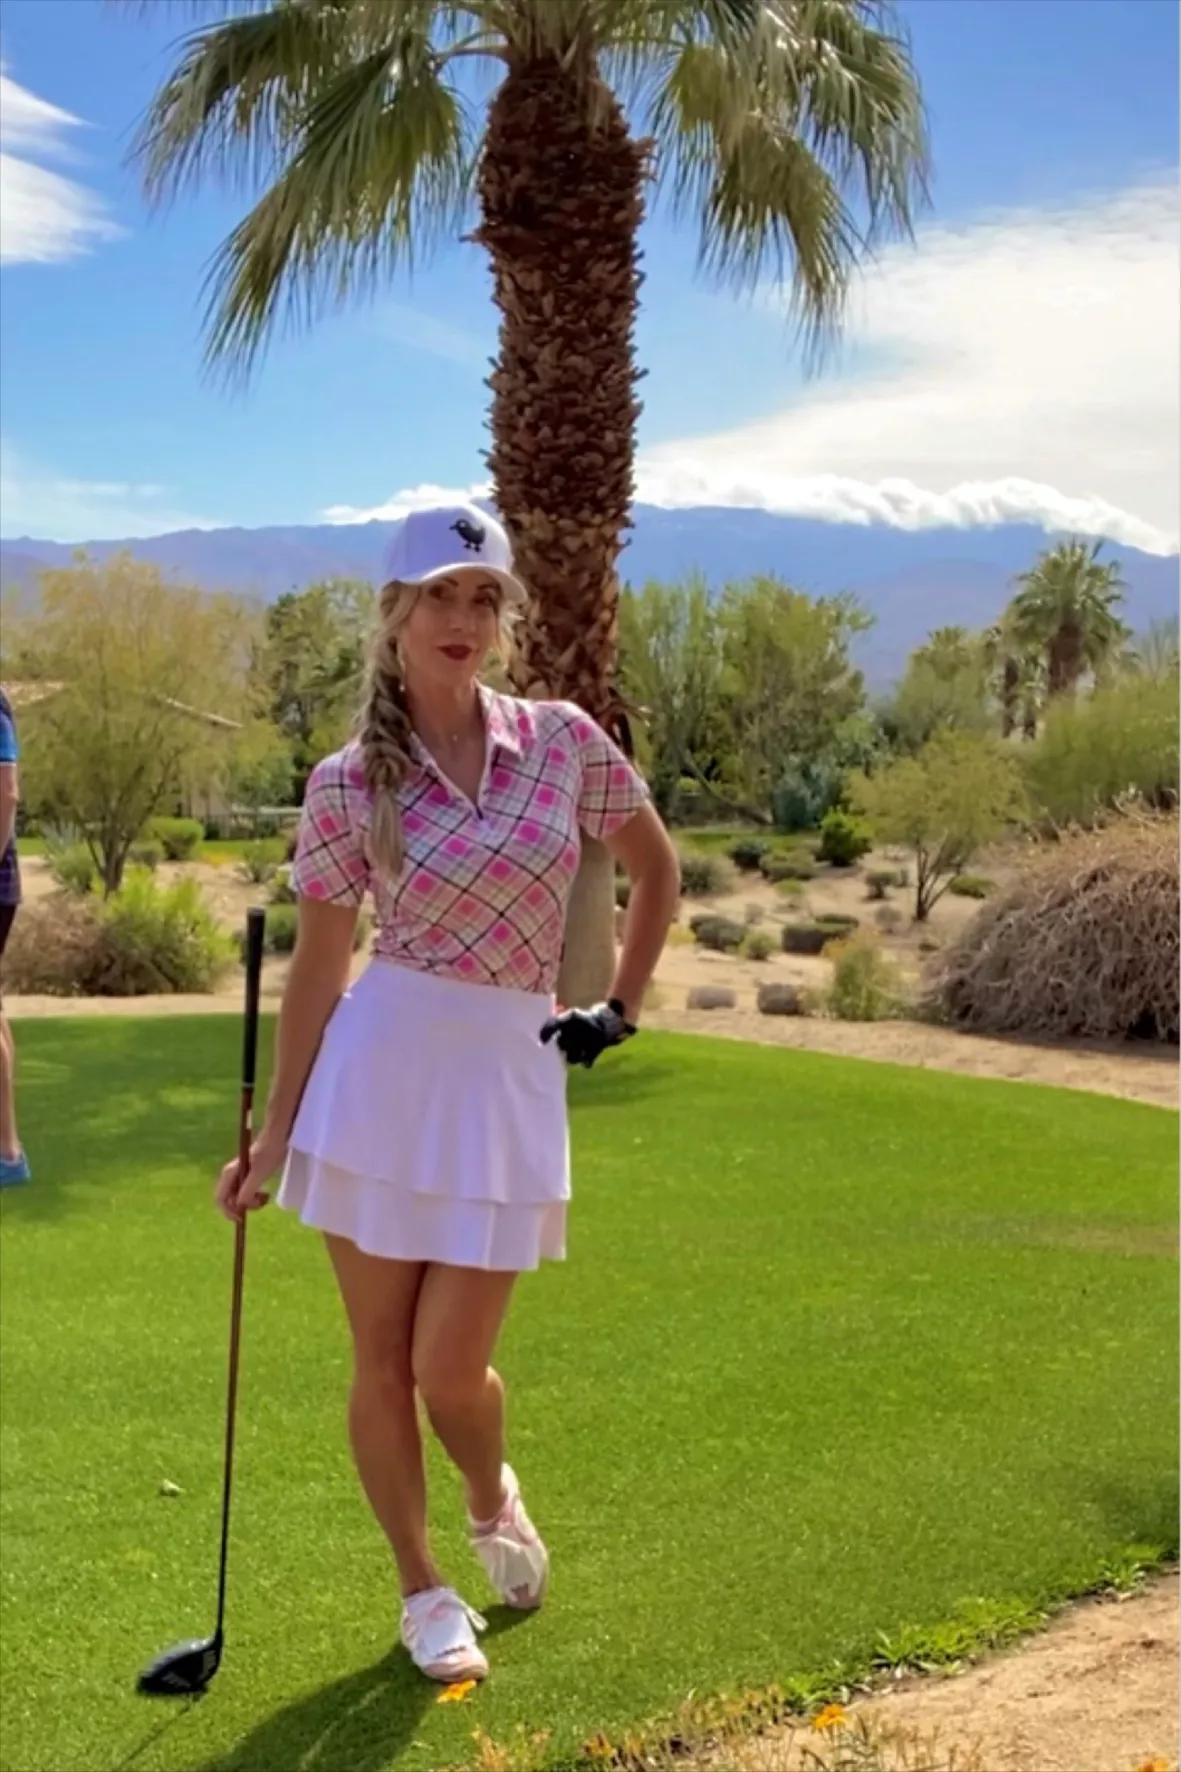 Ladies Golf Apparel - Golf Outfit Women  Golf outfit, Golf outfits women,  Cute golf outfit